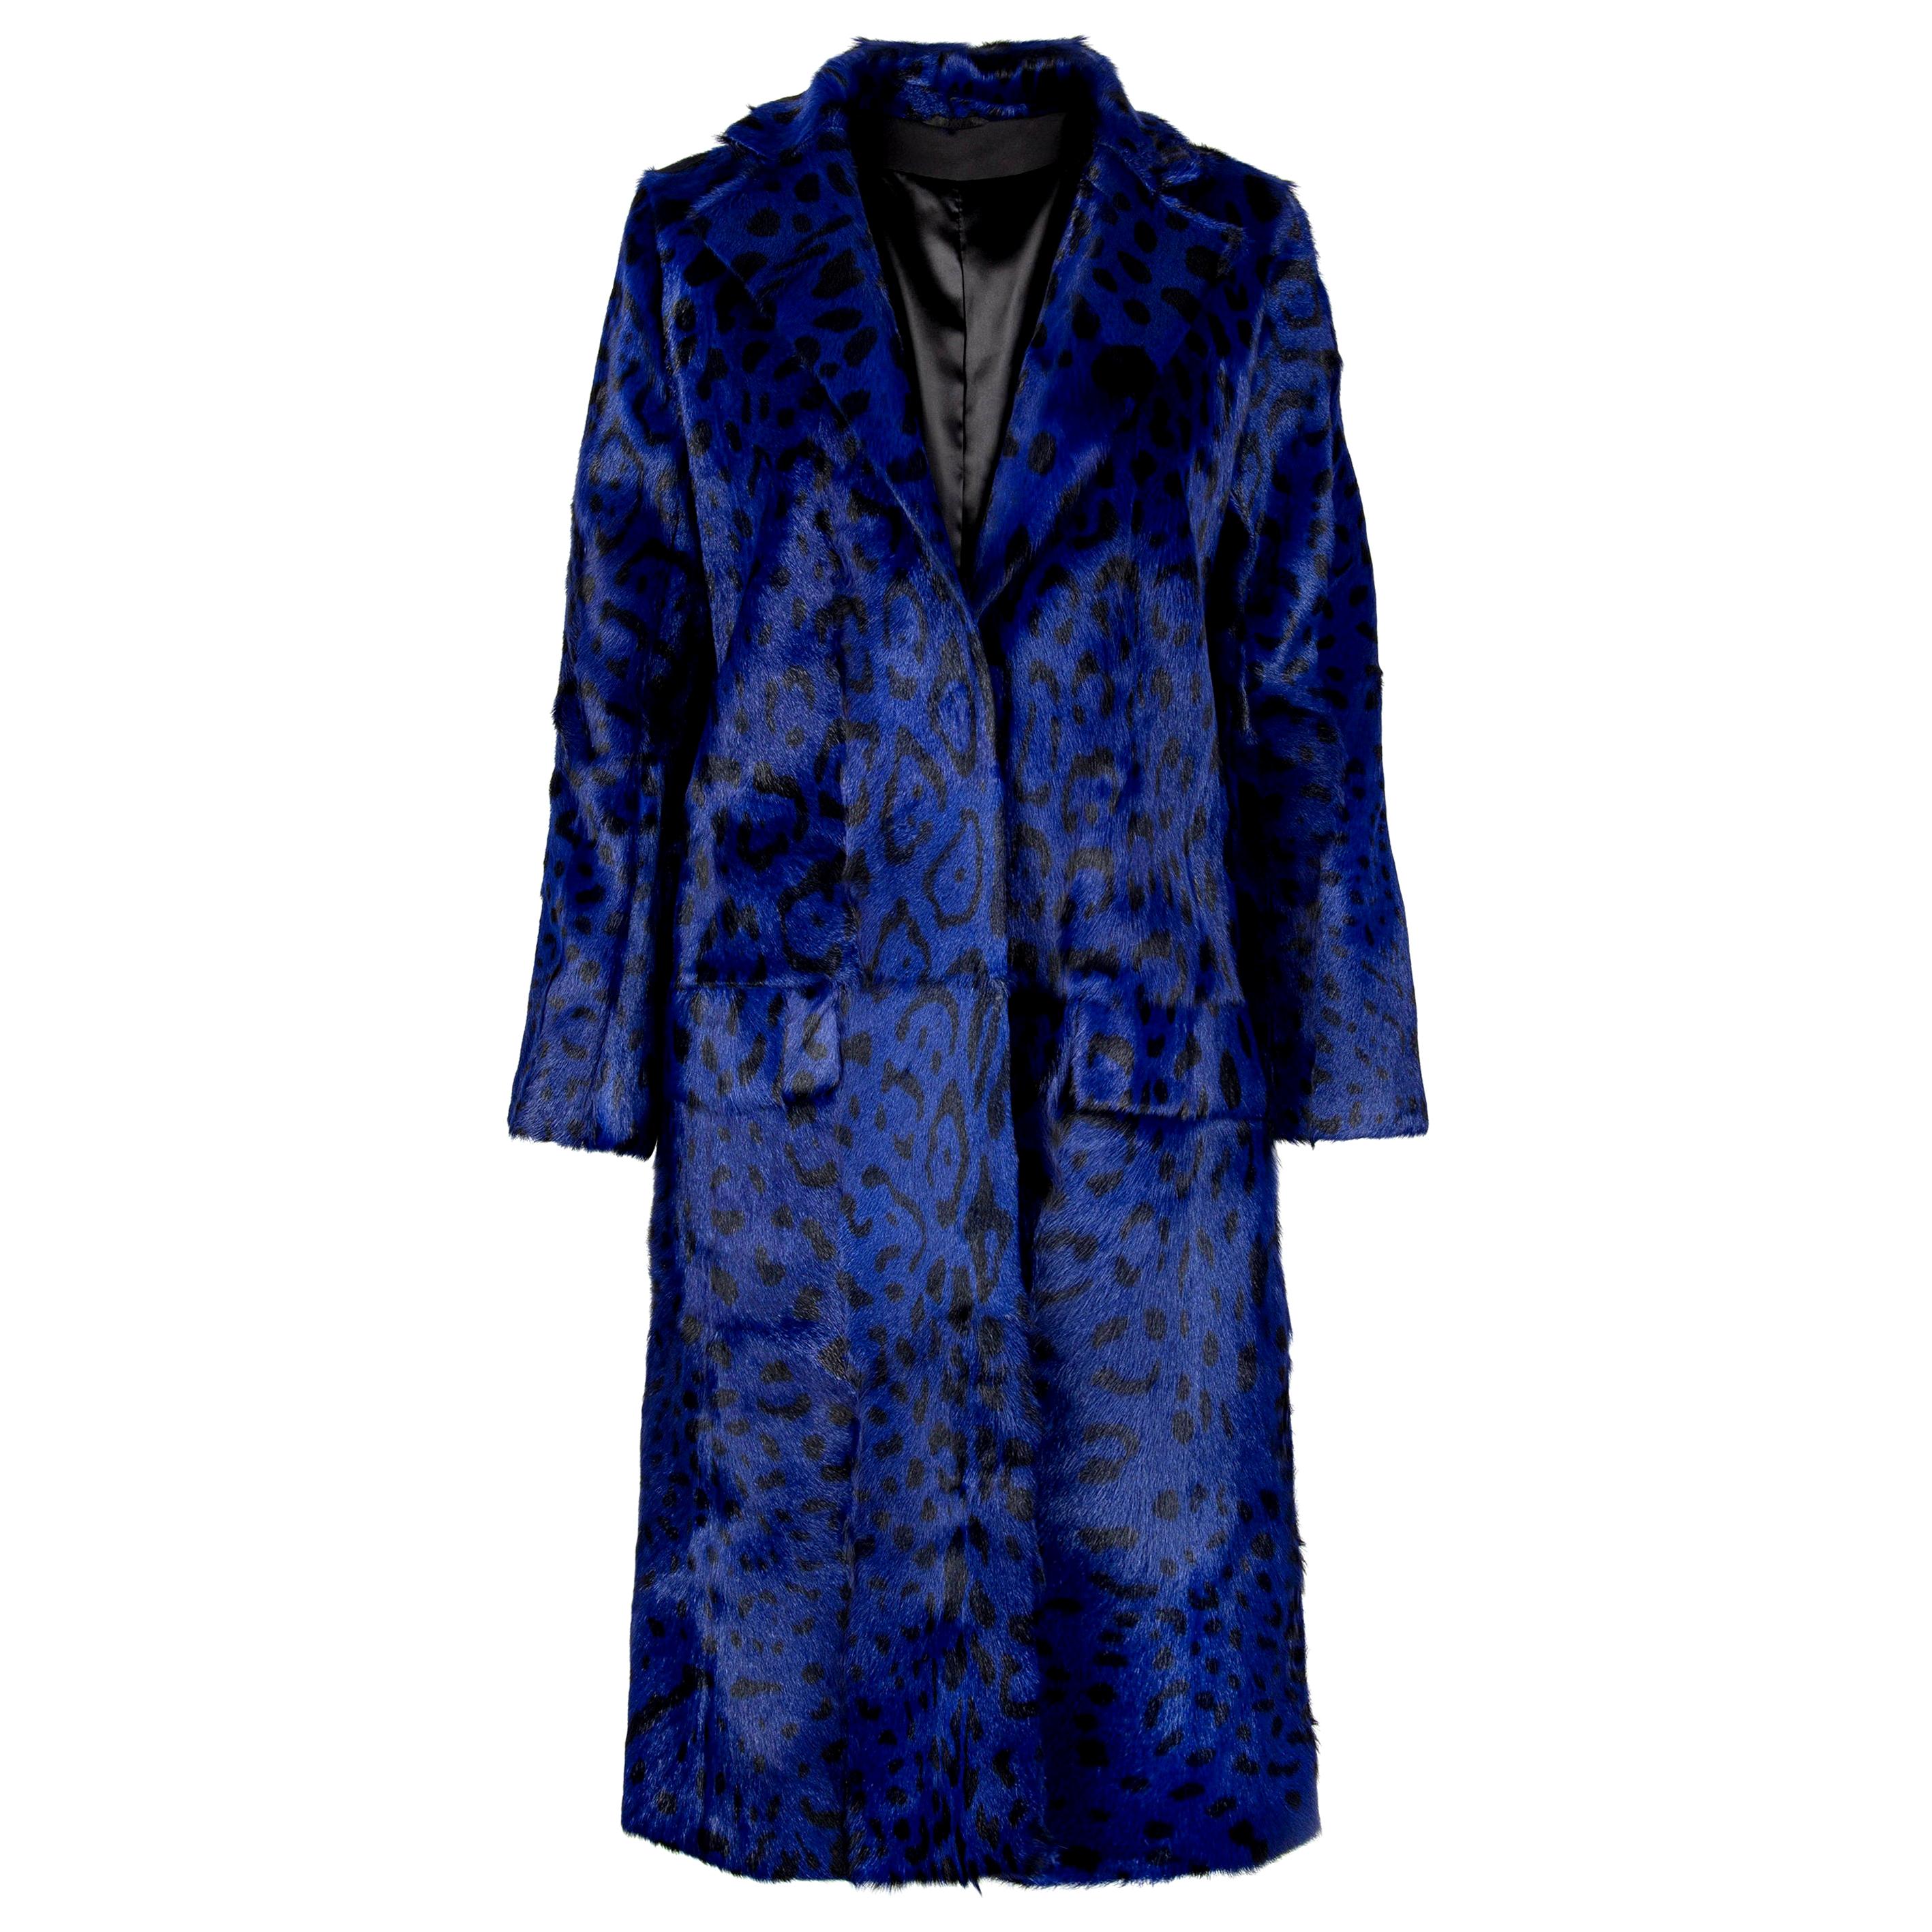 Verheyen London Ink Blue Leopard Print Coat in Goat Hair Fur UK 10 